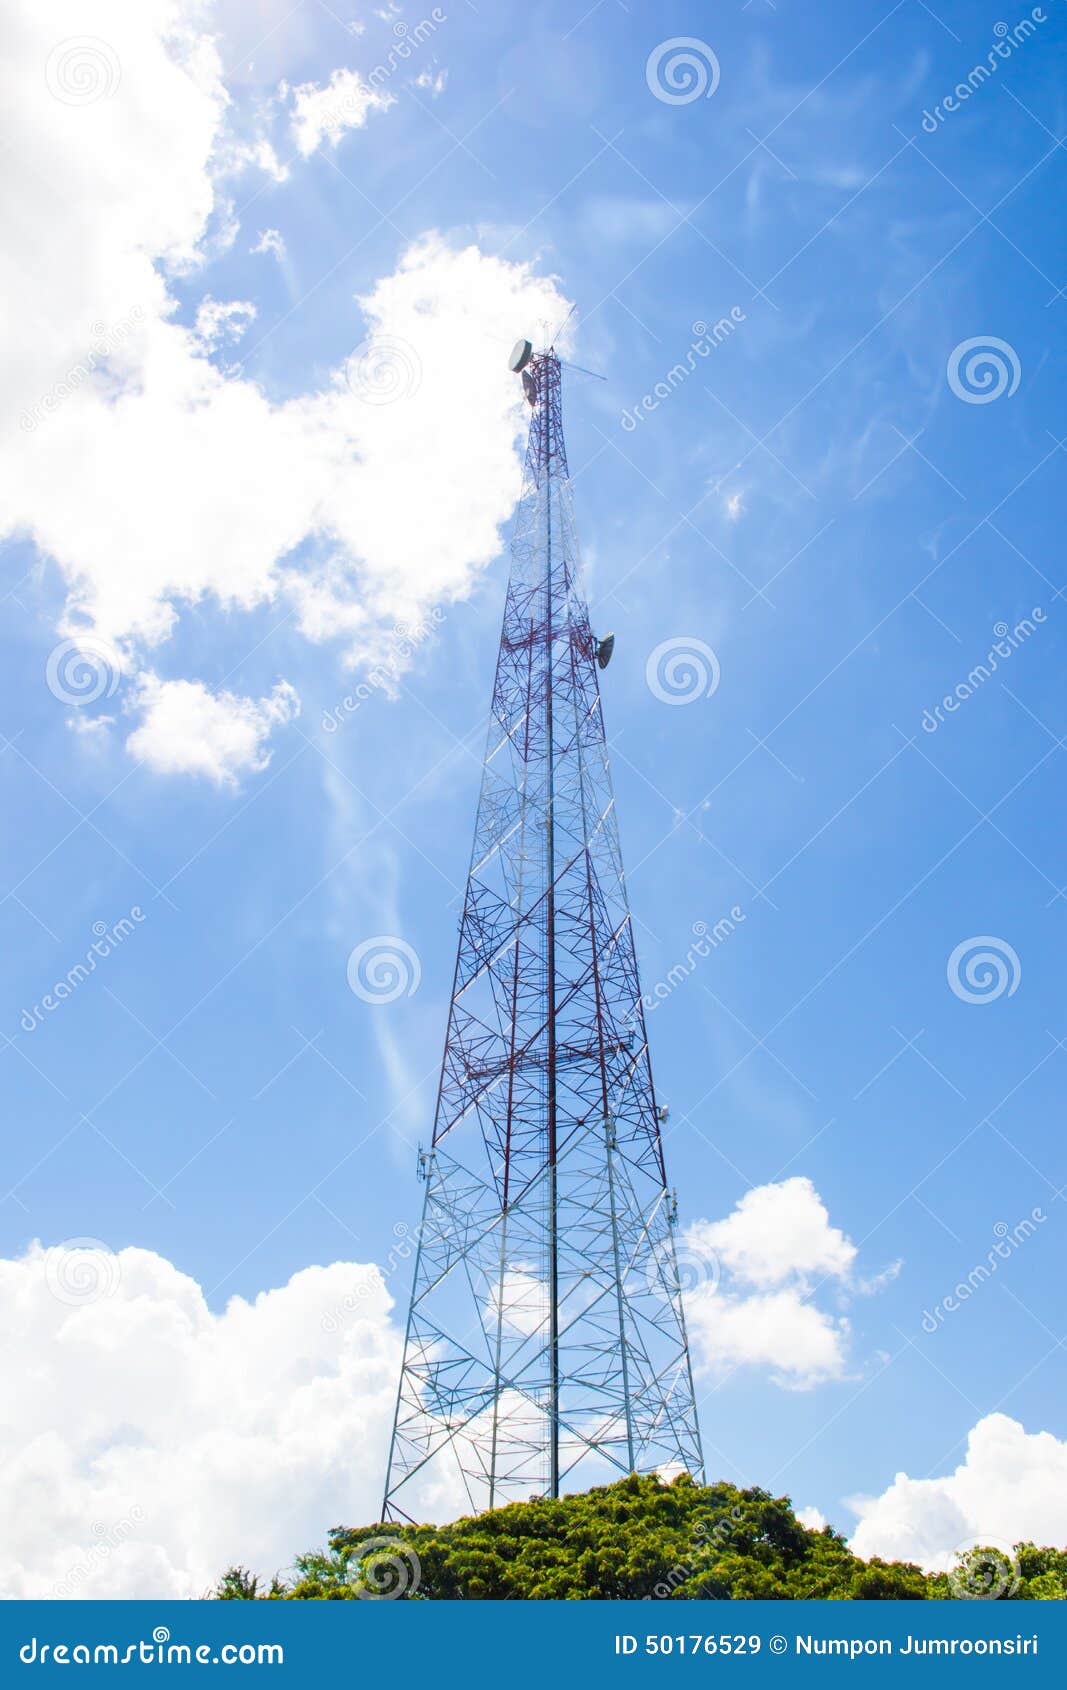 Amateur Radio Tower Stock Photos photo